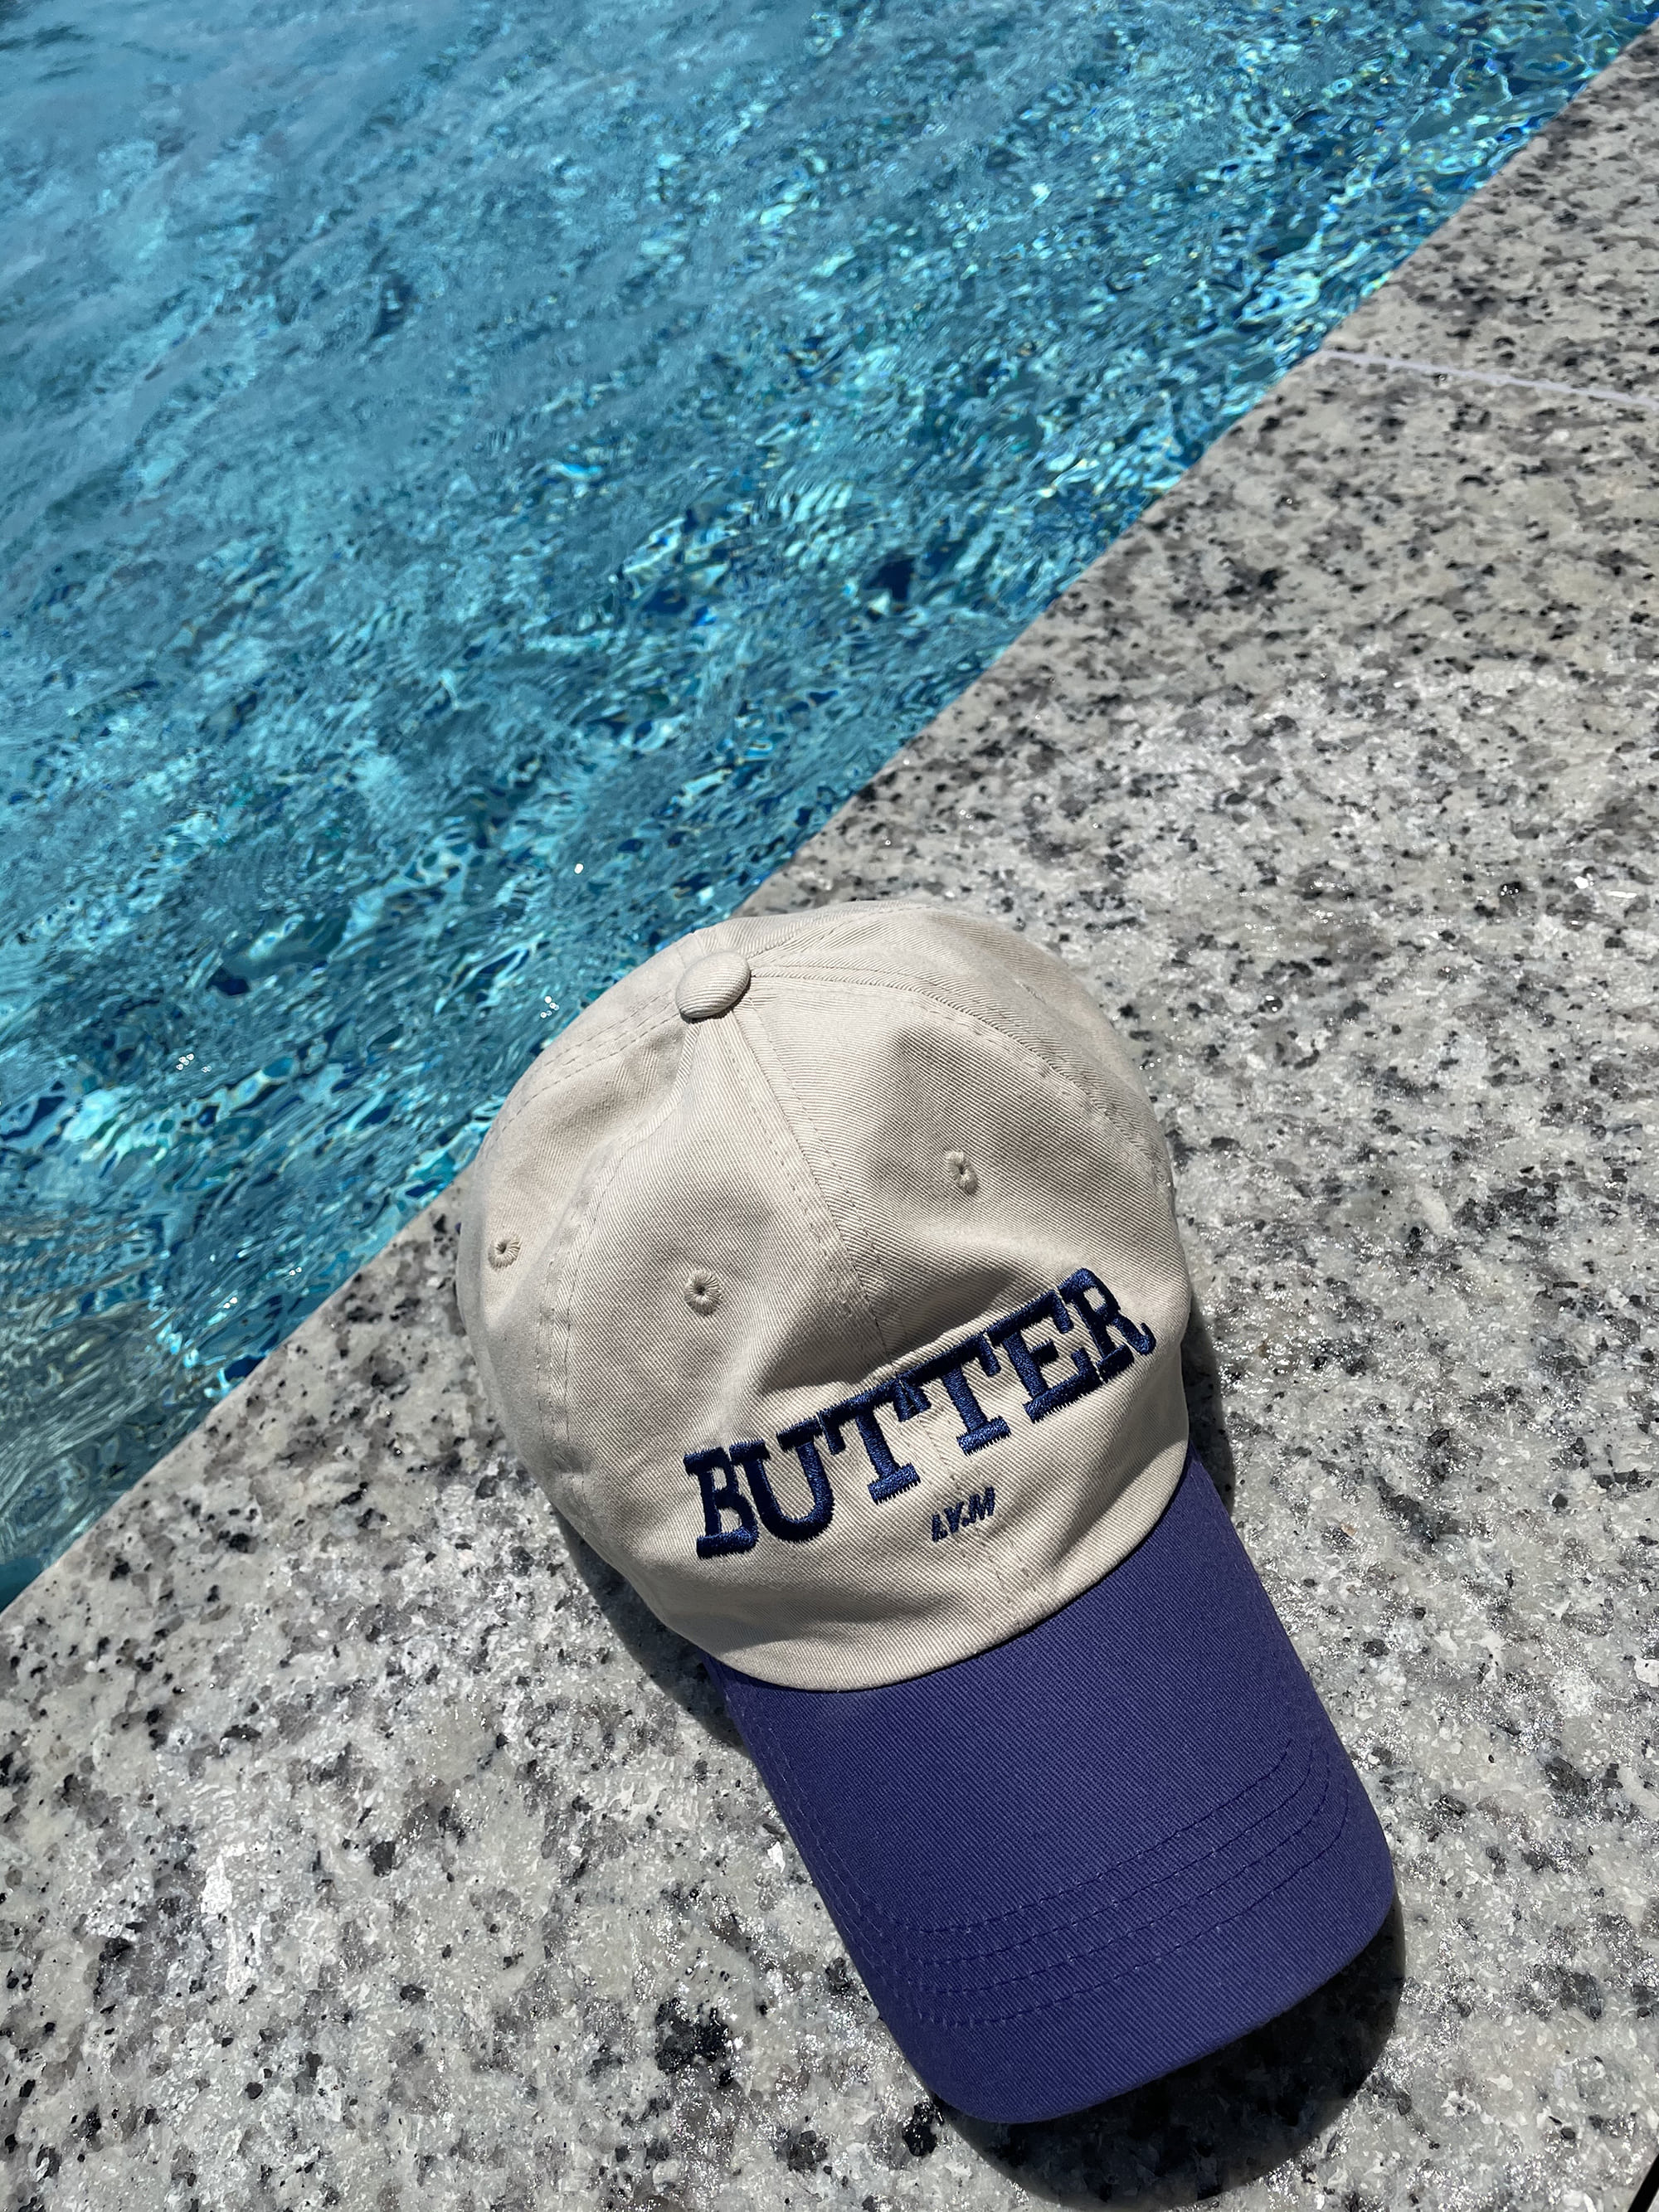 30%--butter cap(beige &amp; blue)